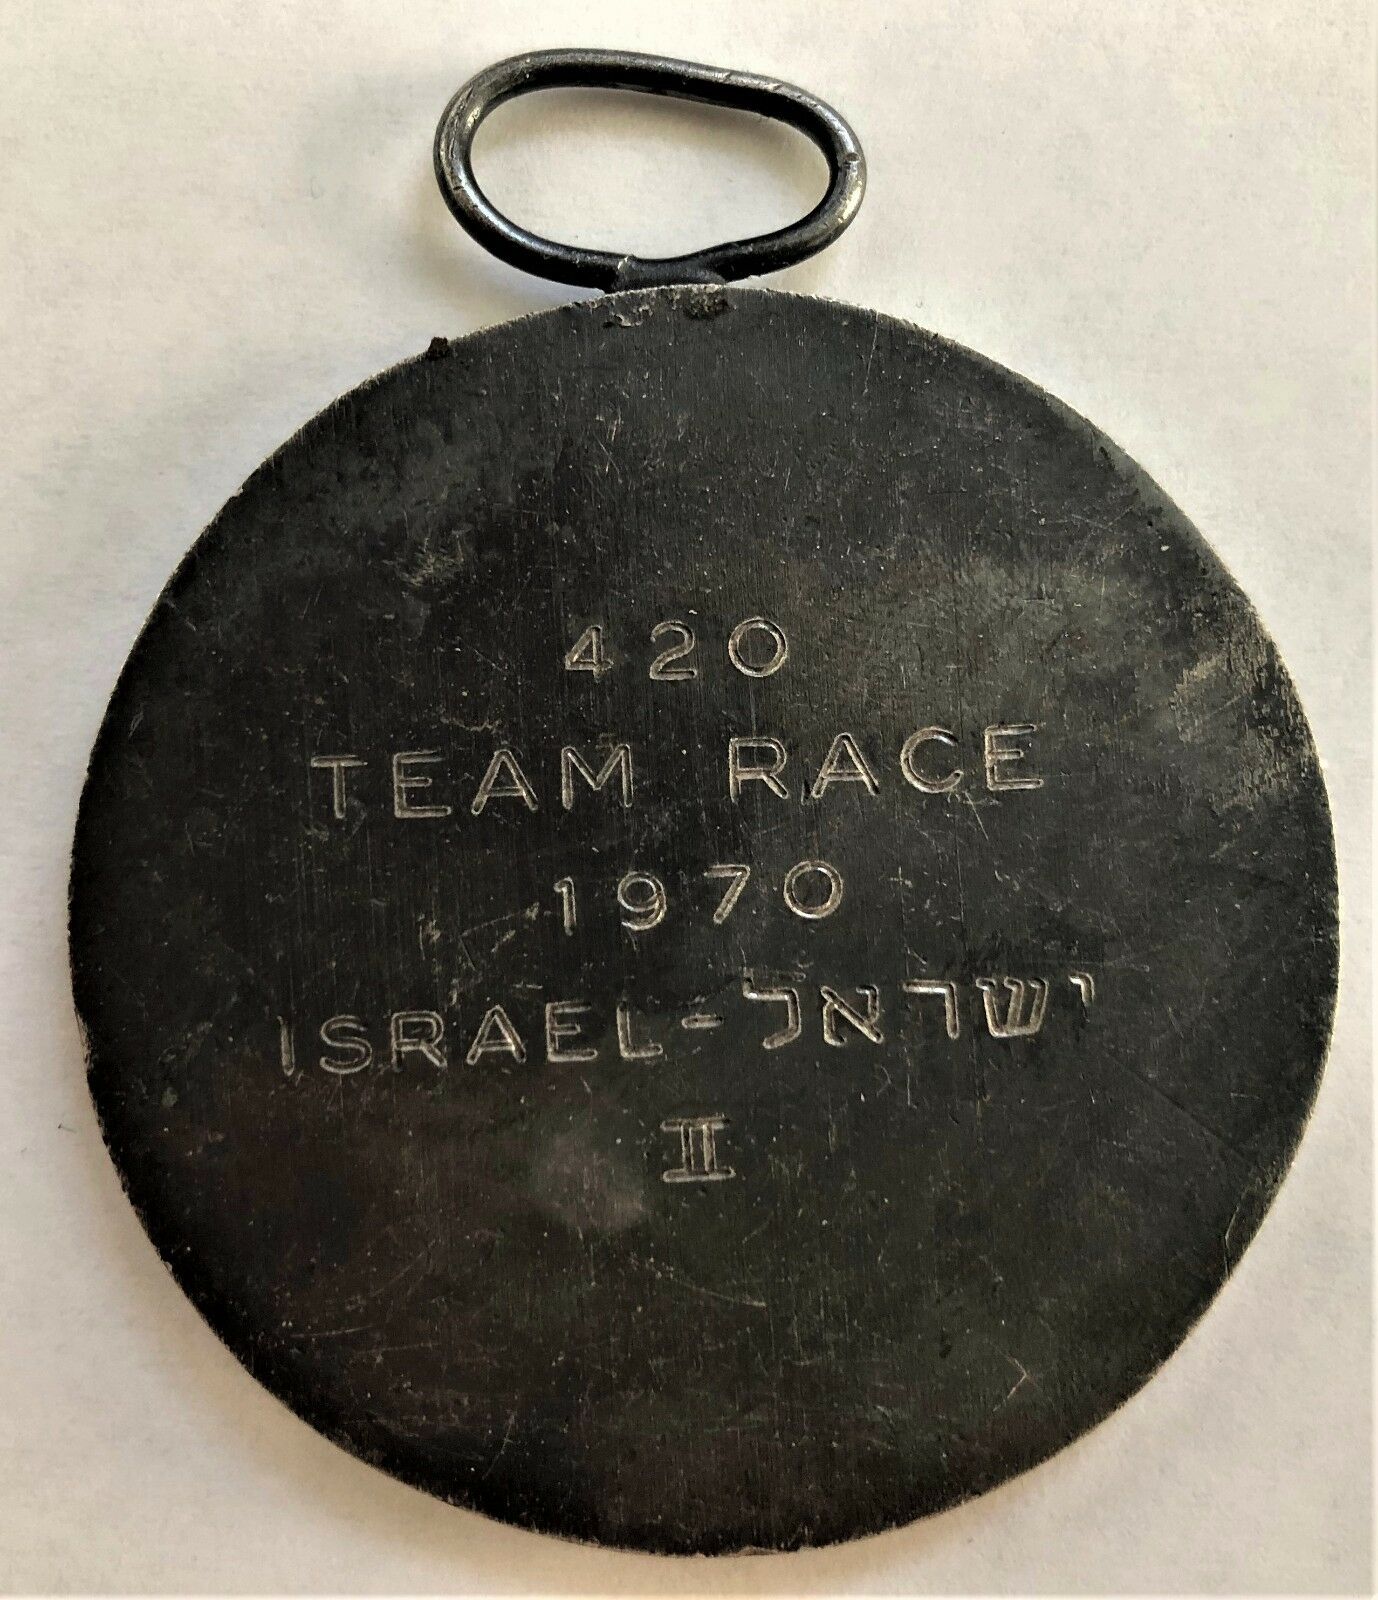 ISRAEL (SPORTS) 420 TEAM RACE 1970 ISRAEL (in ENGLISH & HEBREW) II WREATH FRONT